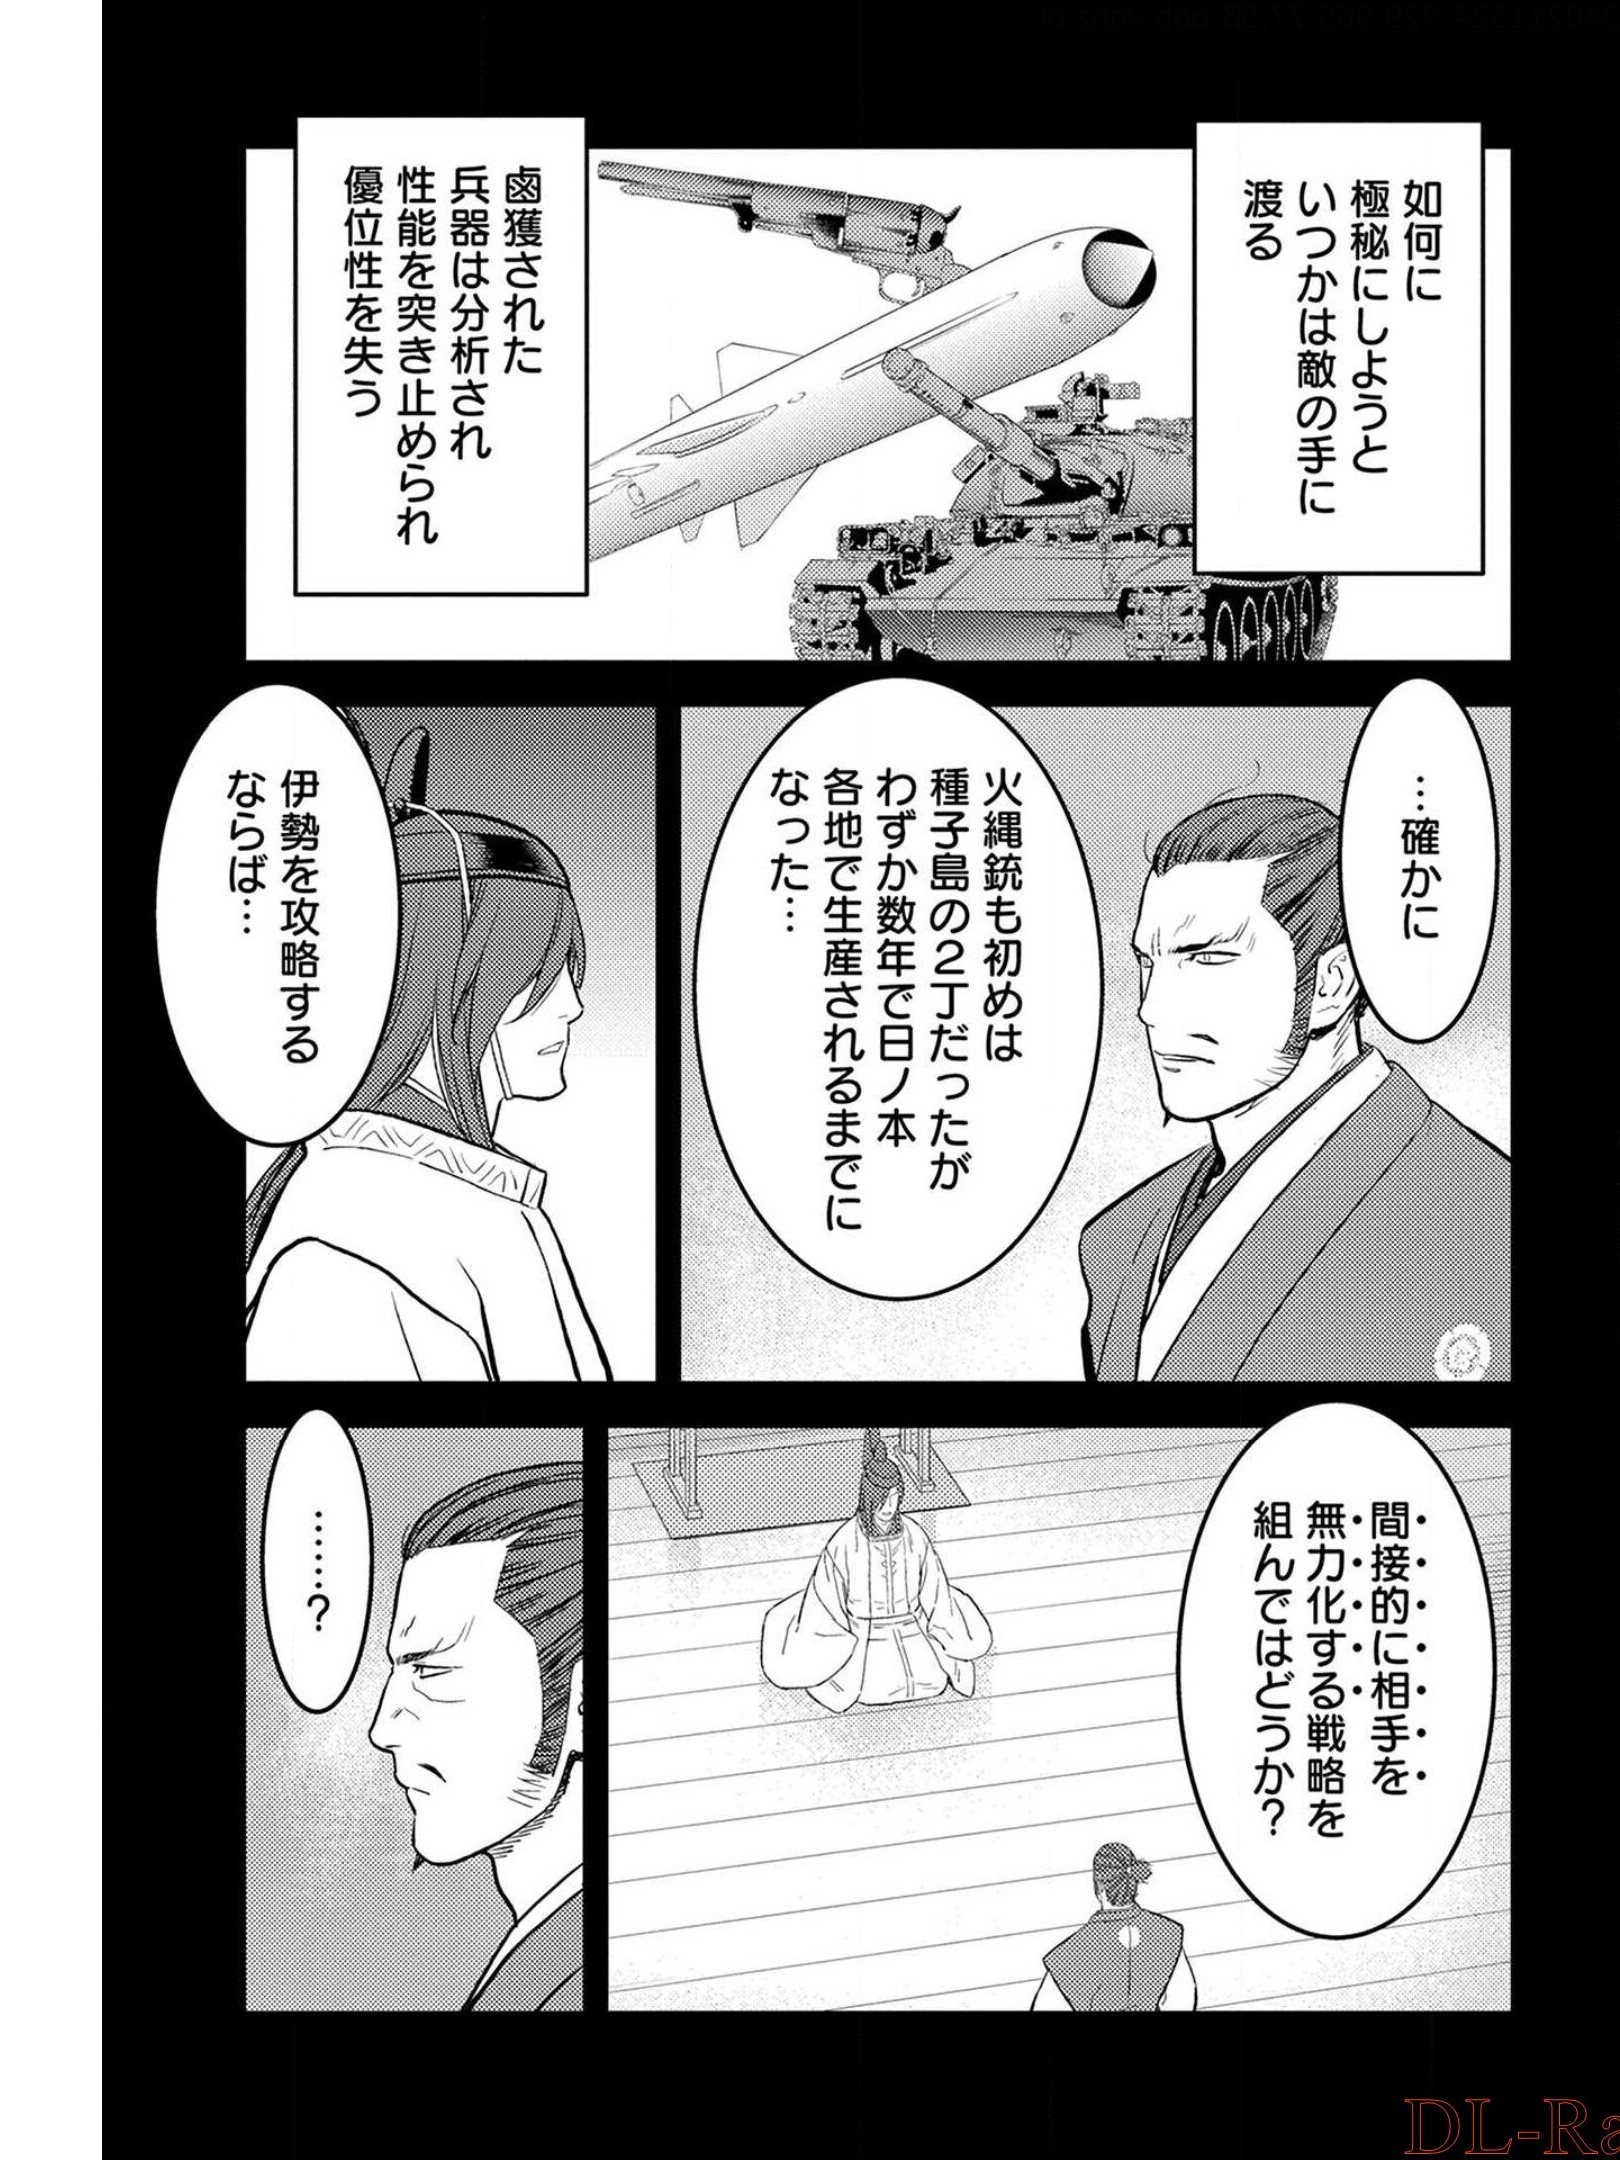 Sengoku Komachi Kuroutan - Chapter 40 - Page 3